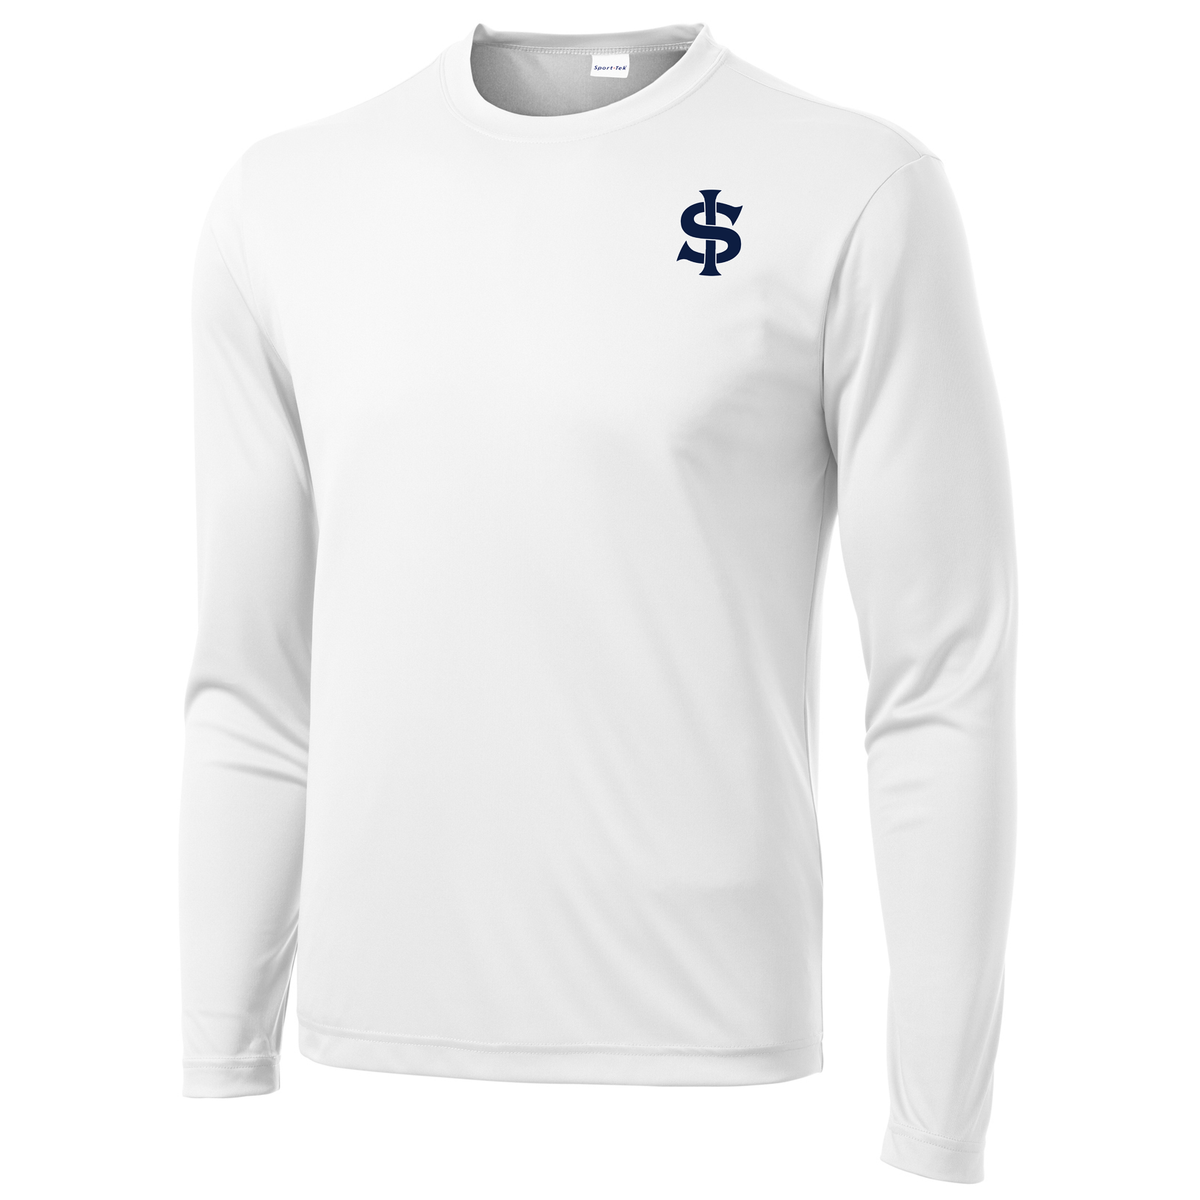 Iowa Sandlot Baseball Long Sleeve Performance Shirt